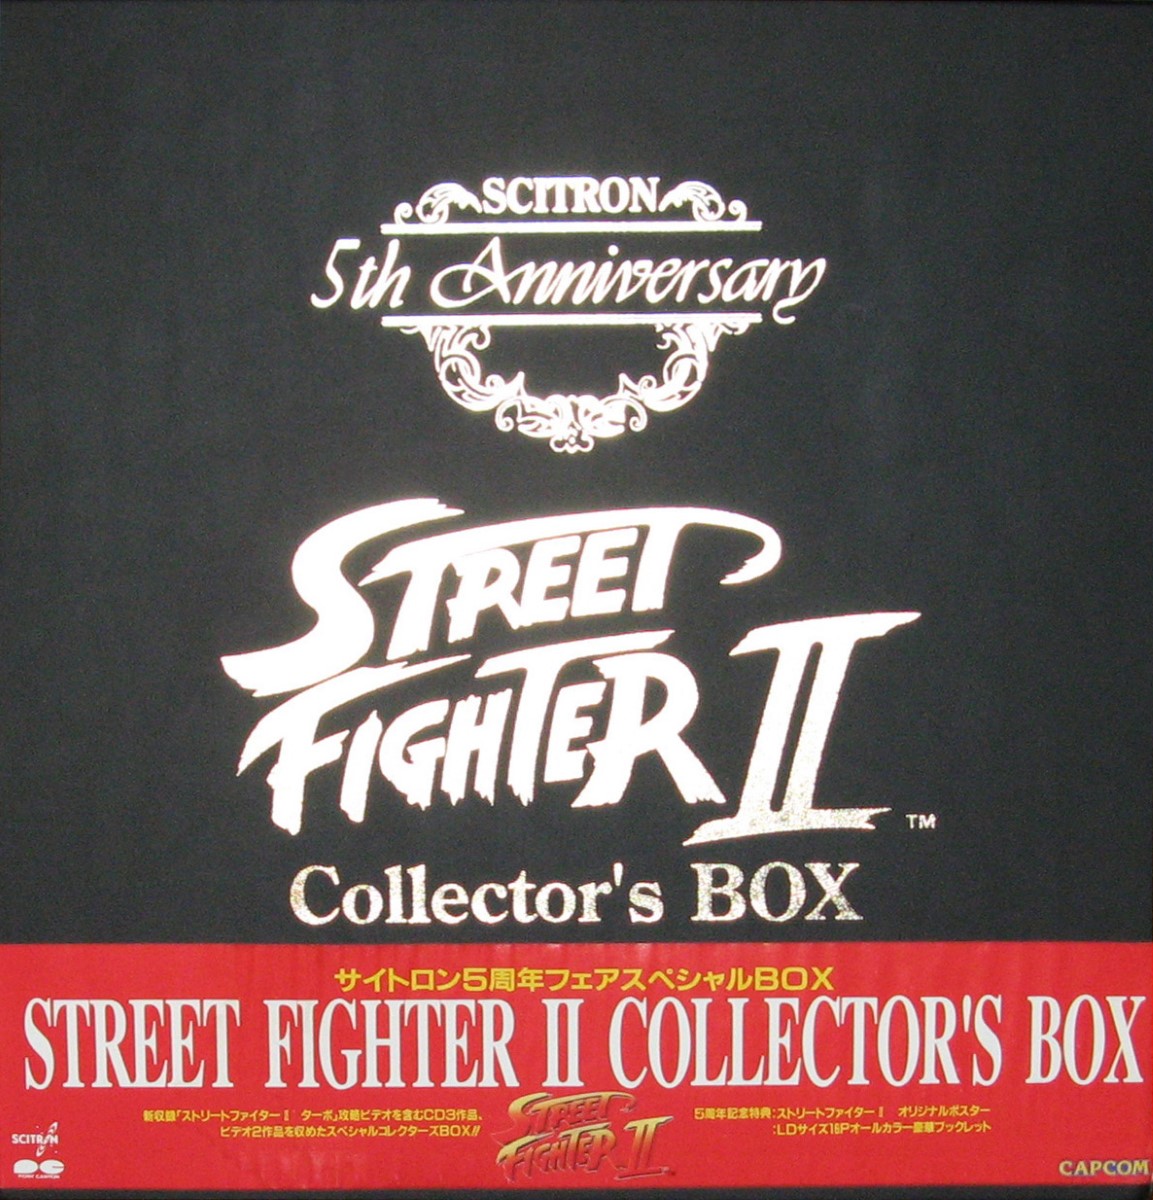 [930917]SCITRON 5th Anniversary Street Fighter II Collector's BOX[256K]